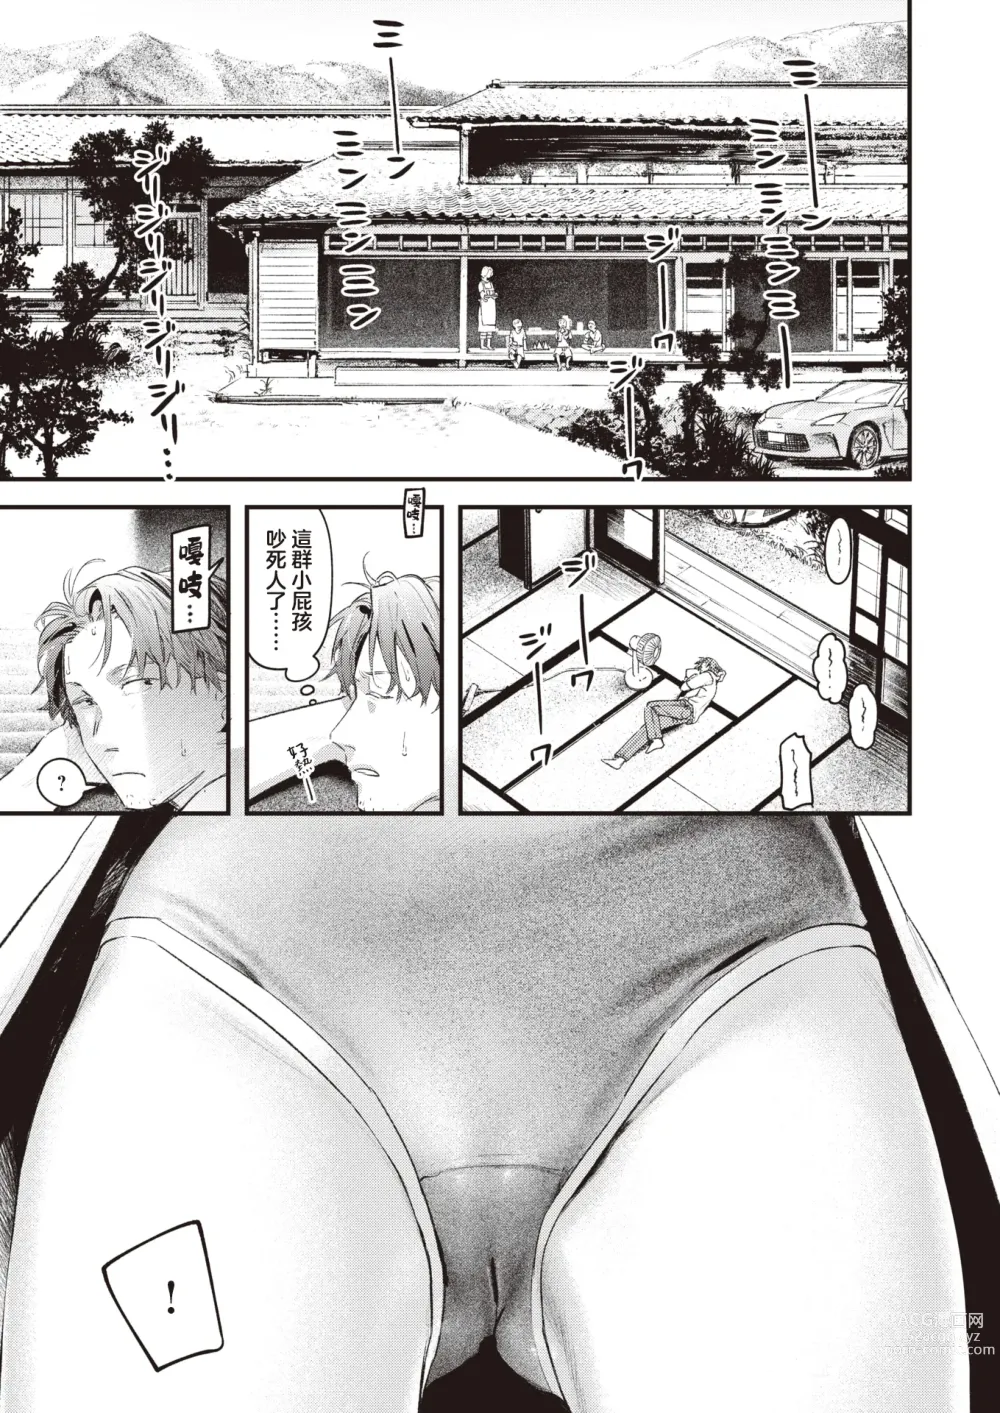 Page 4 of manga 夏日渐行远